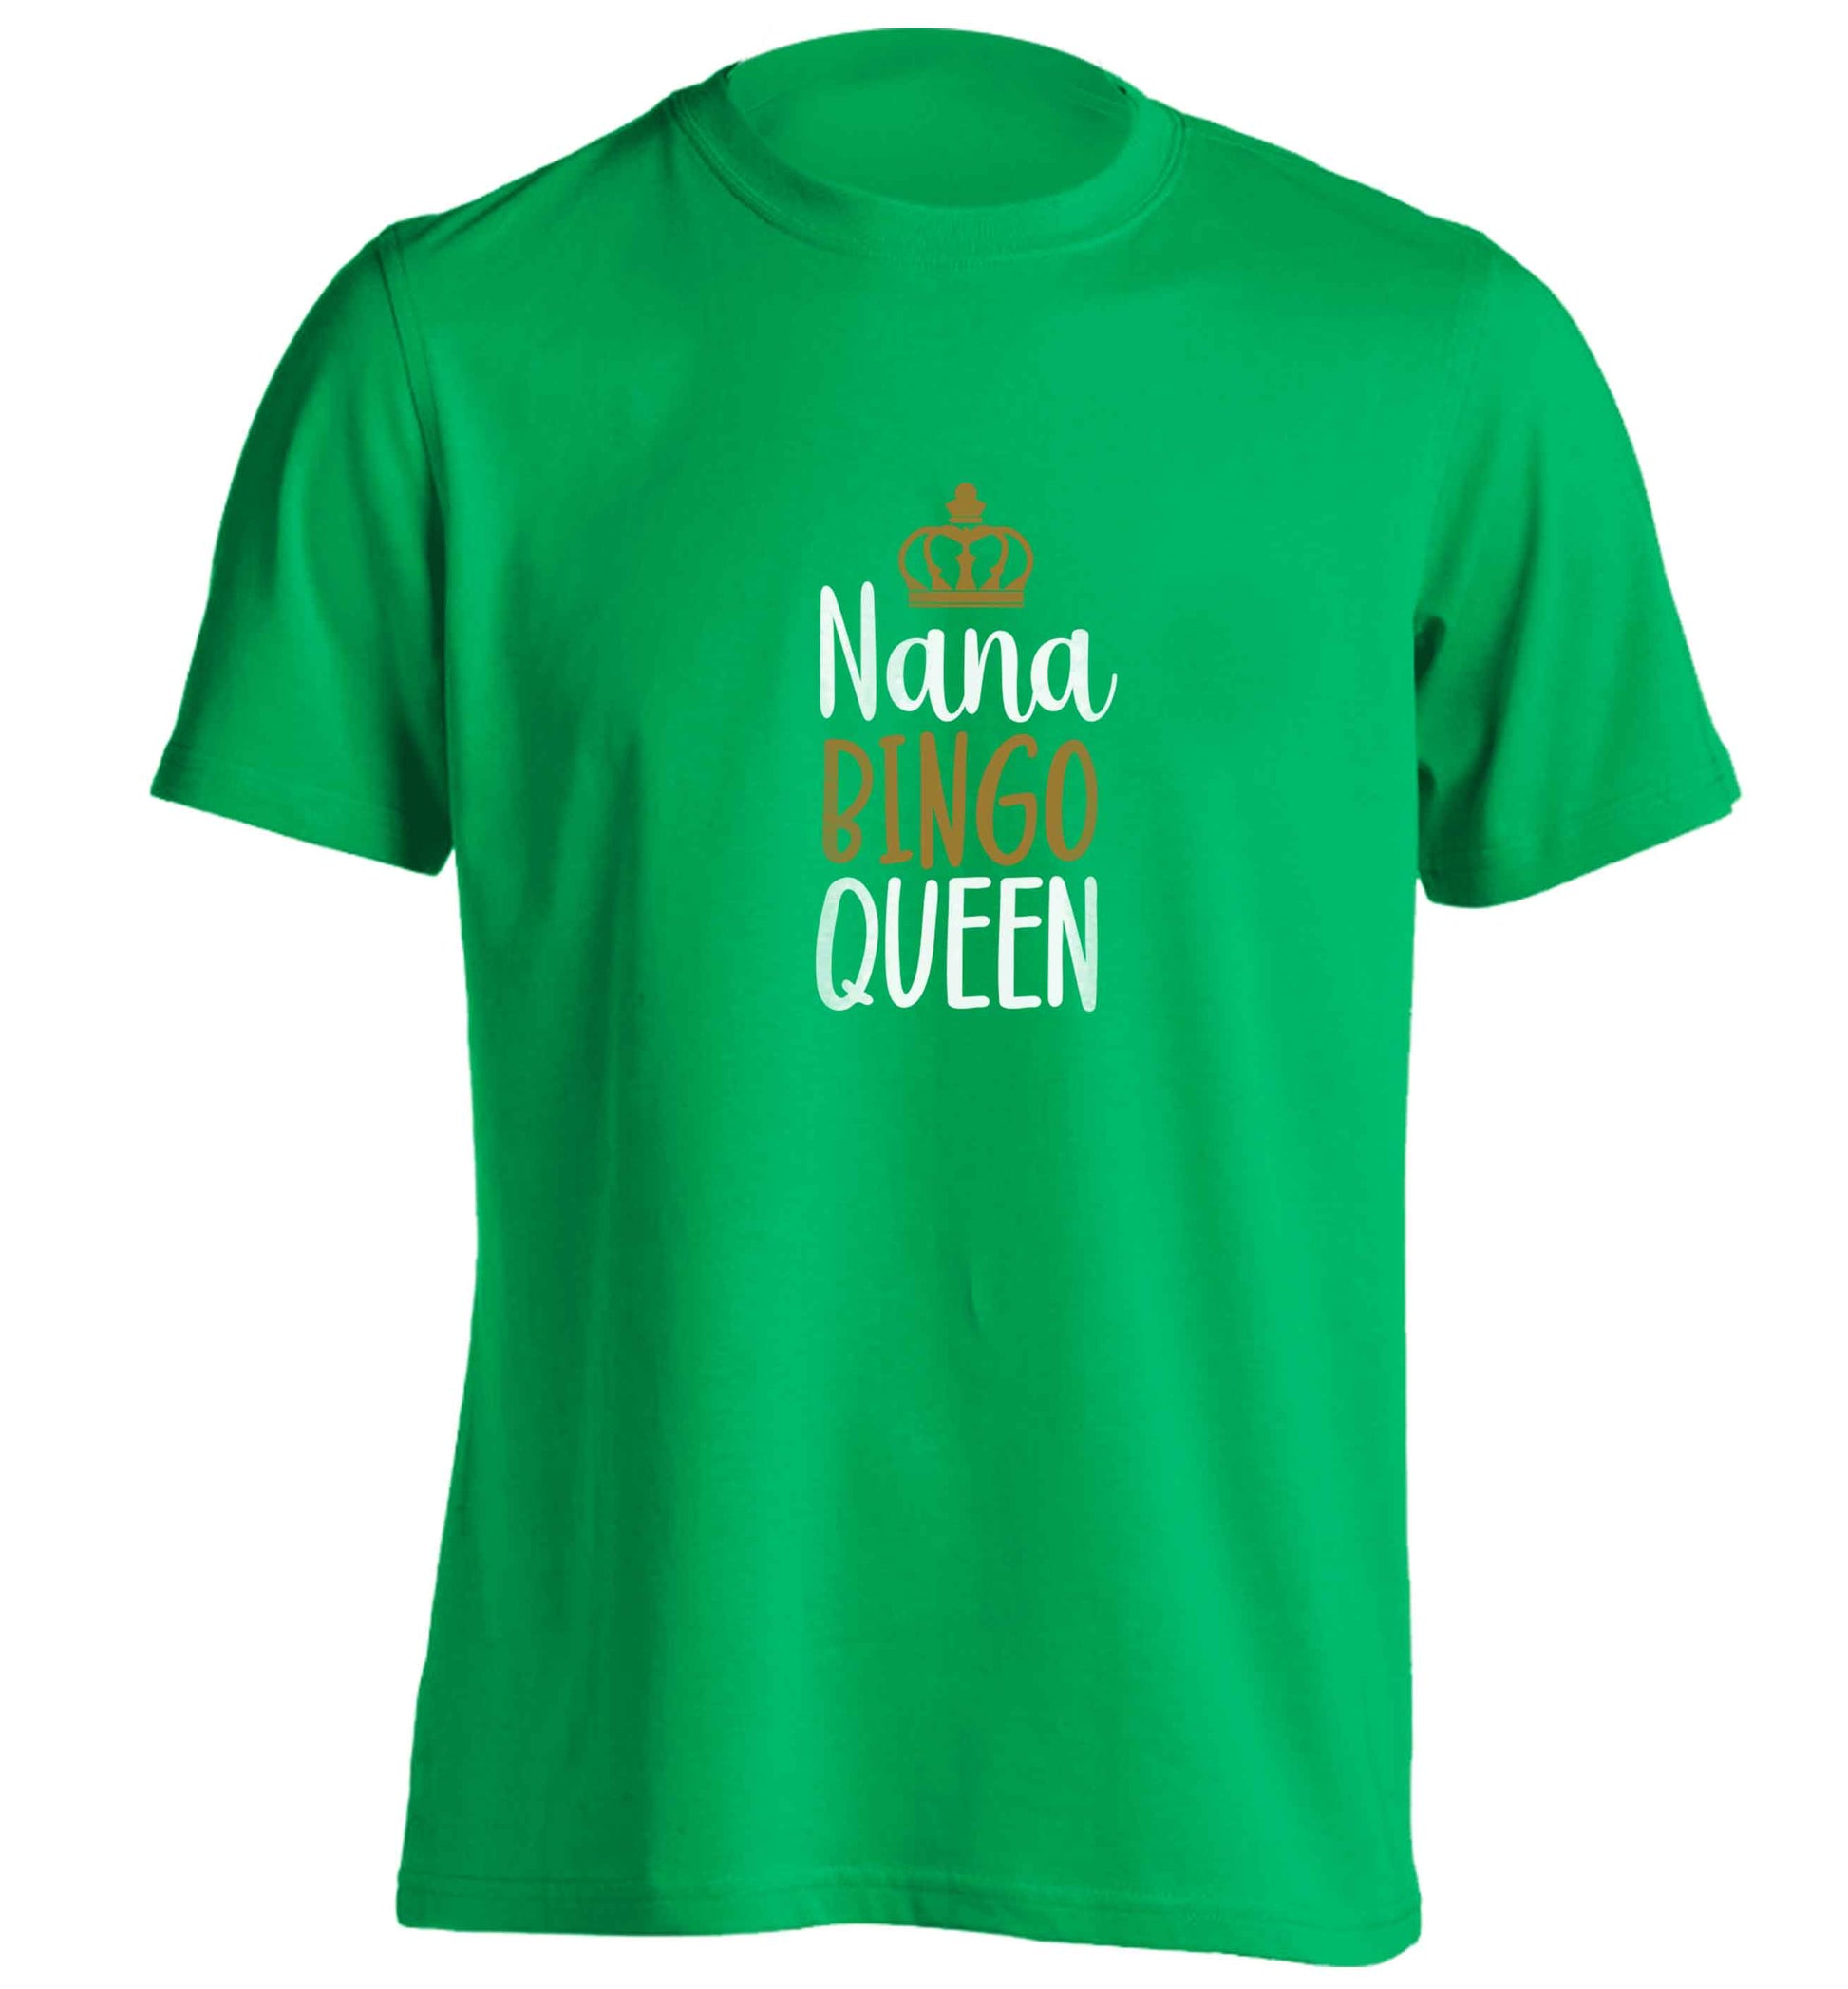 Personalised bingo queen adults unisex green Tshirt 2XL